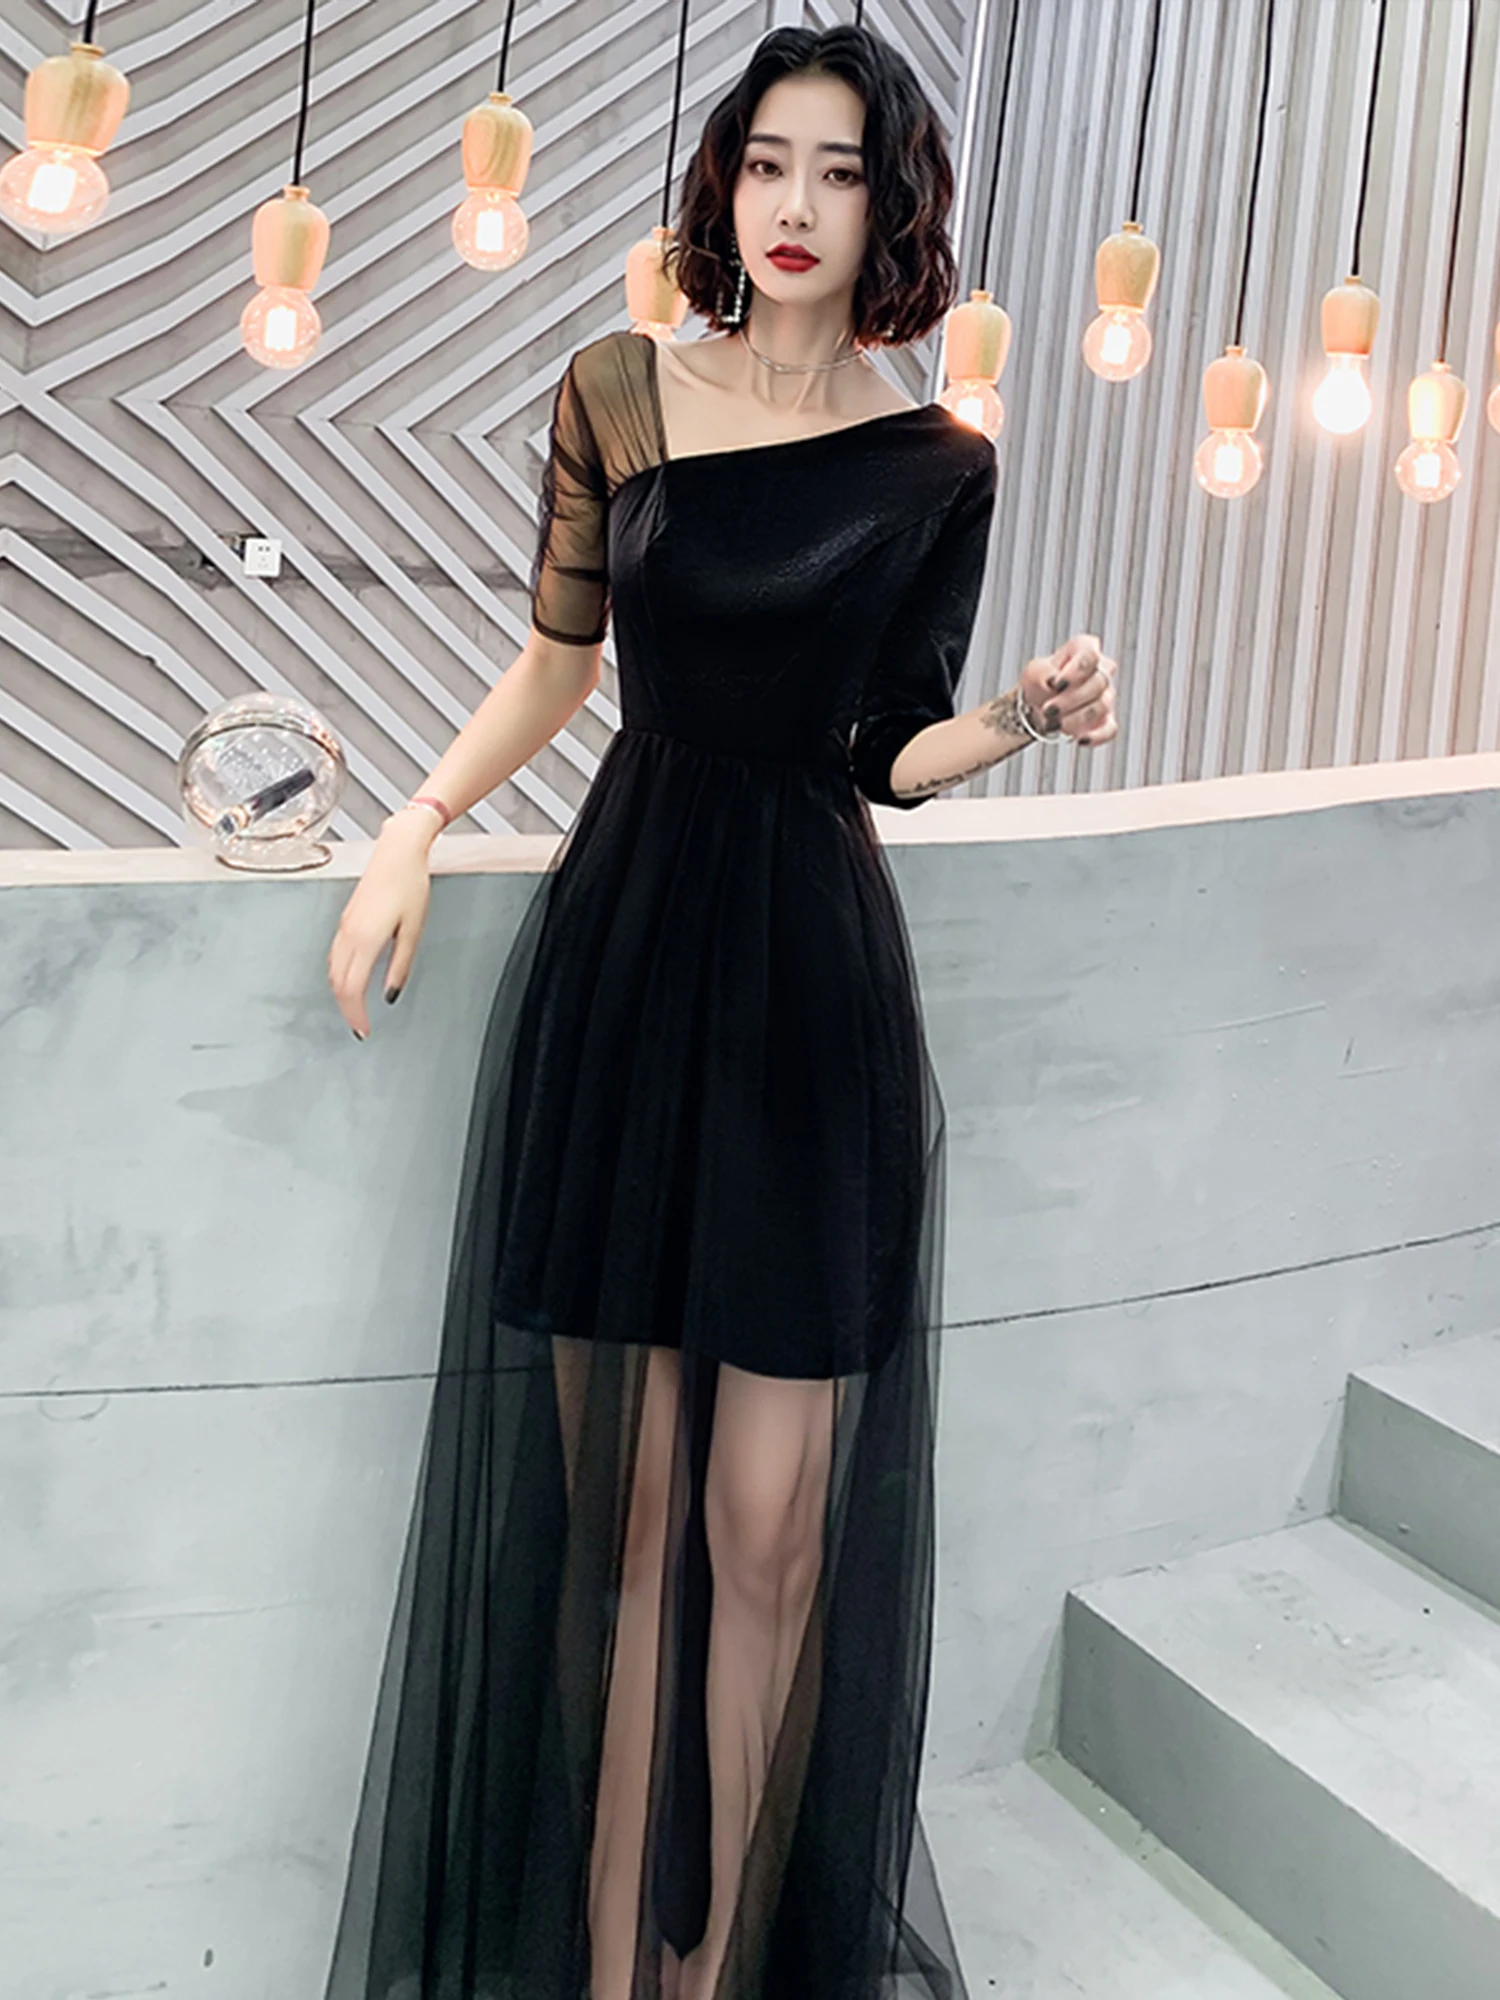 

Black Evening Dress For Women Party Dress Light Luxury Dress Banquet Socialite Host Gown Black Gauze Party Dress